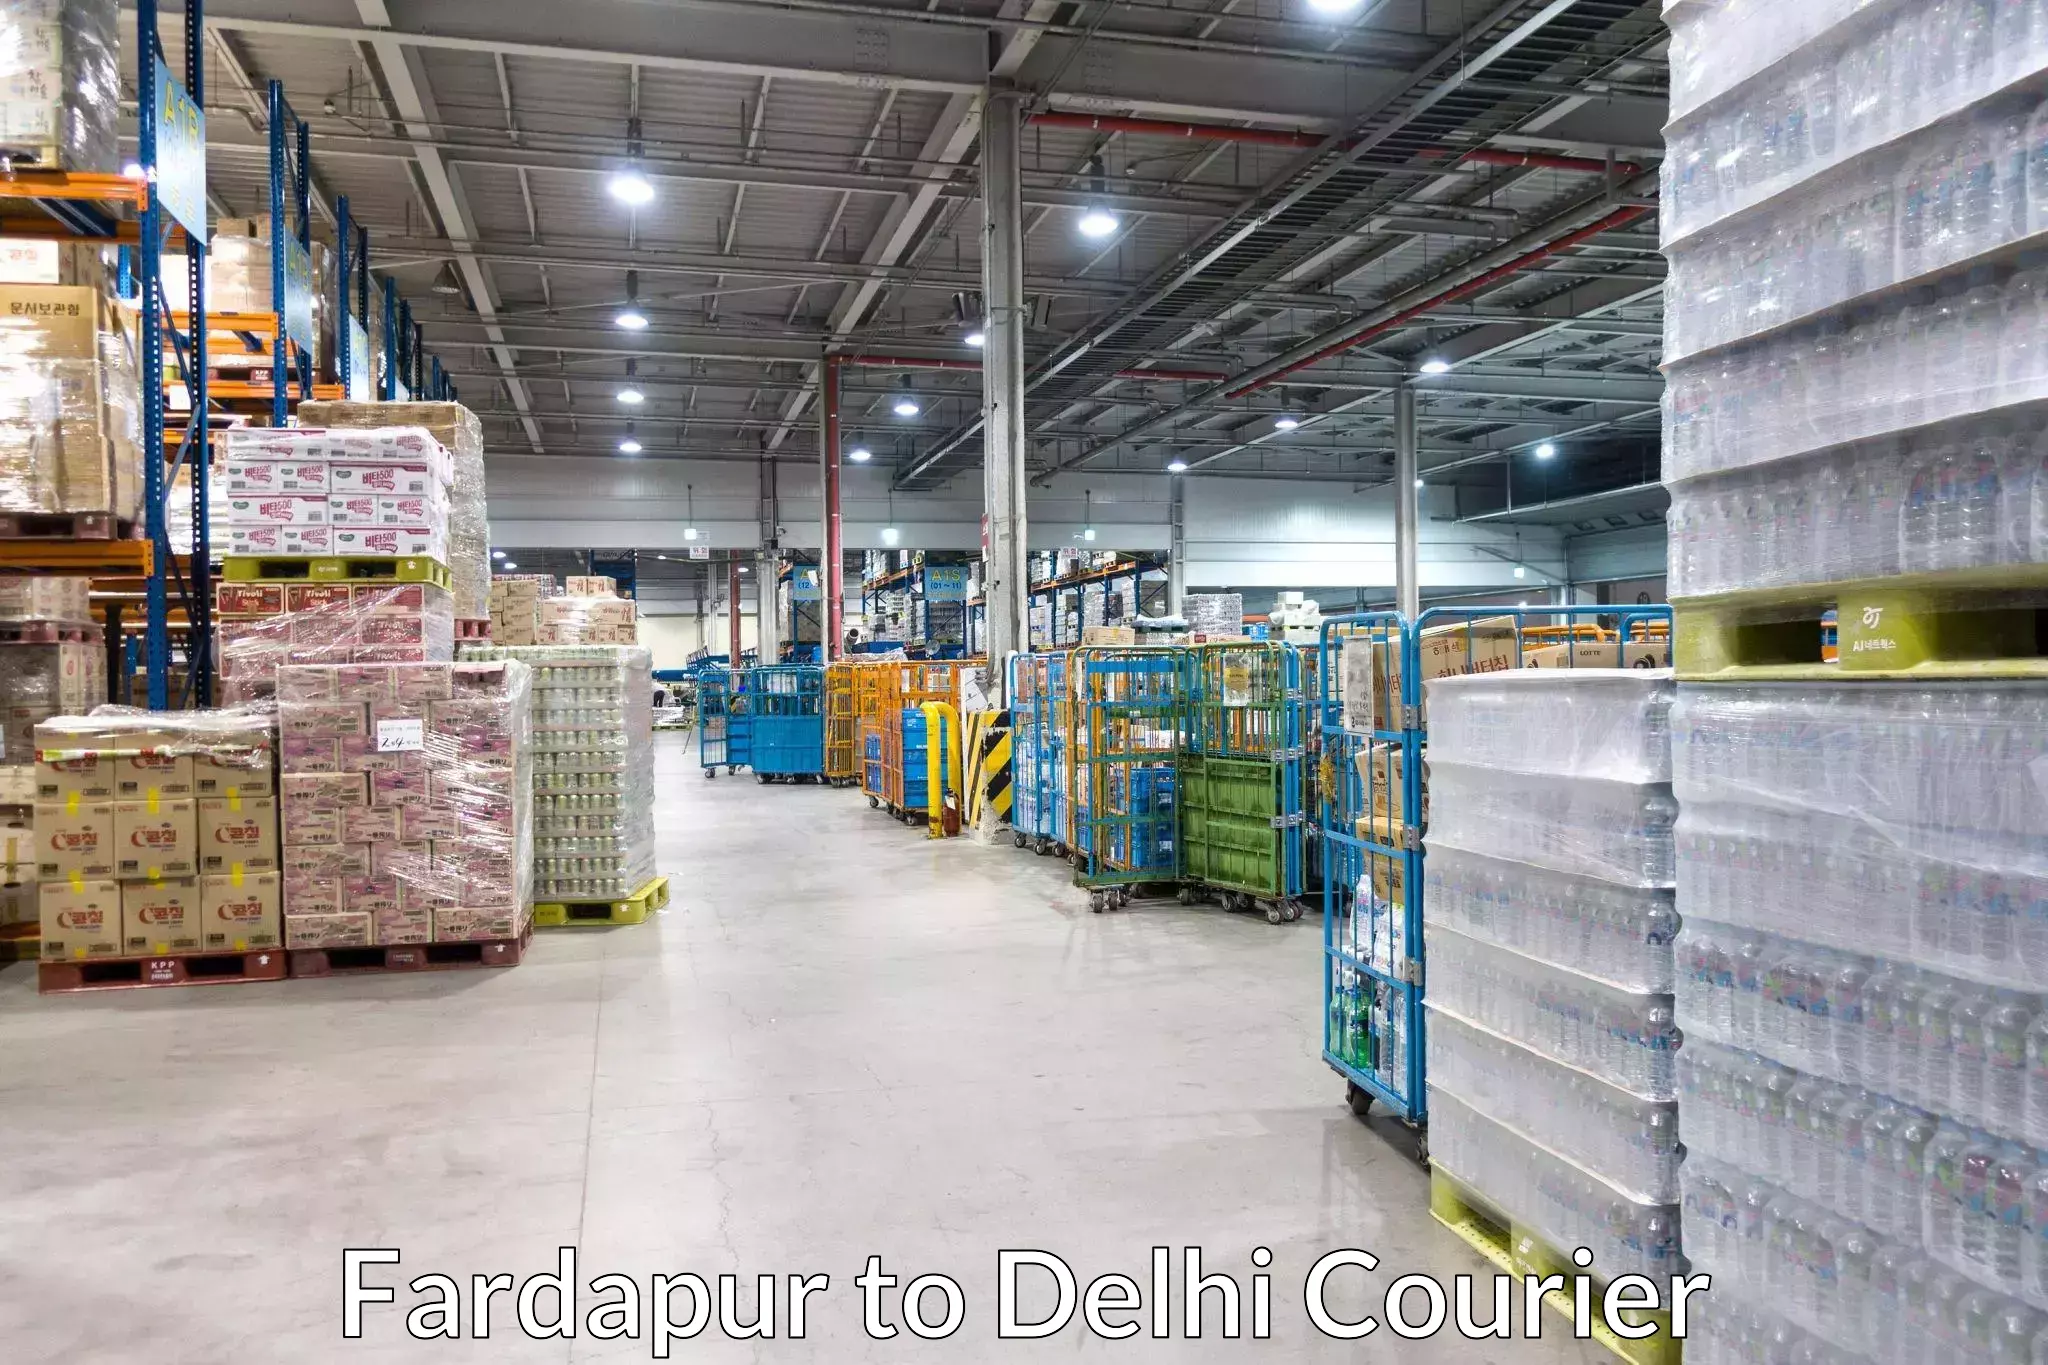 Courier service partnerships Fardapur to Delhi